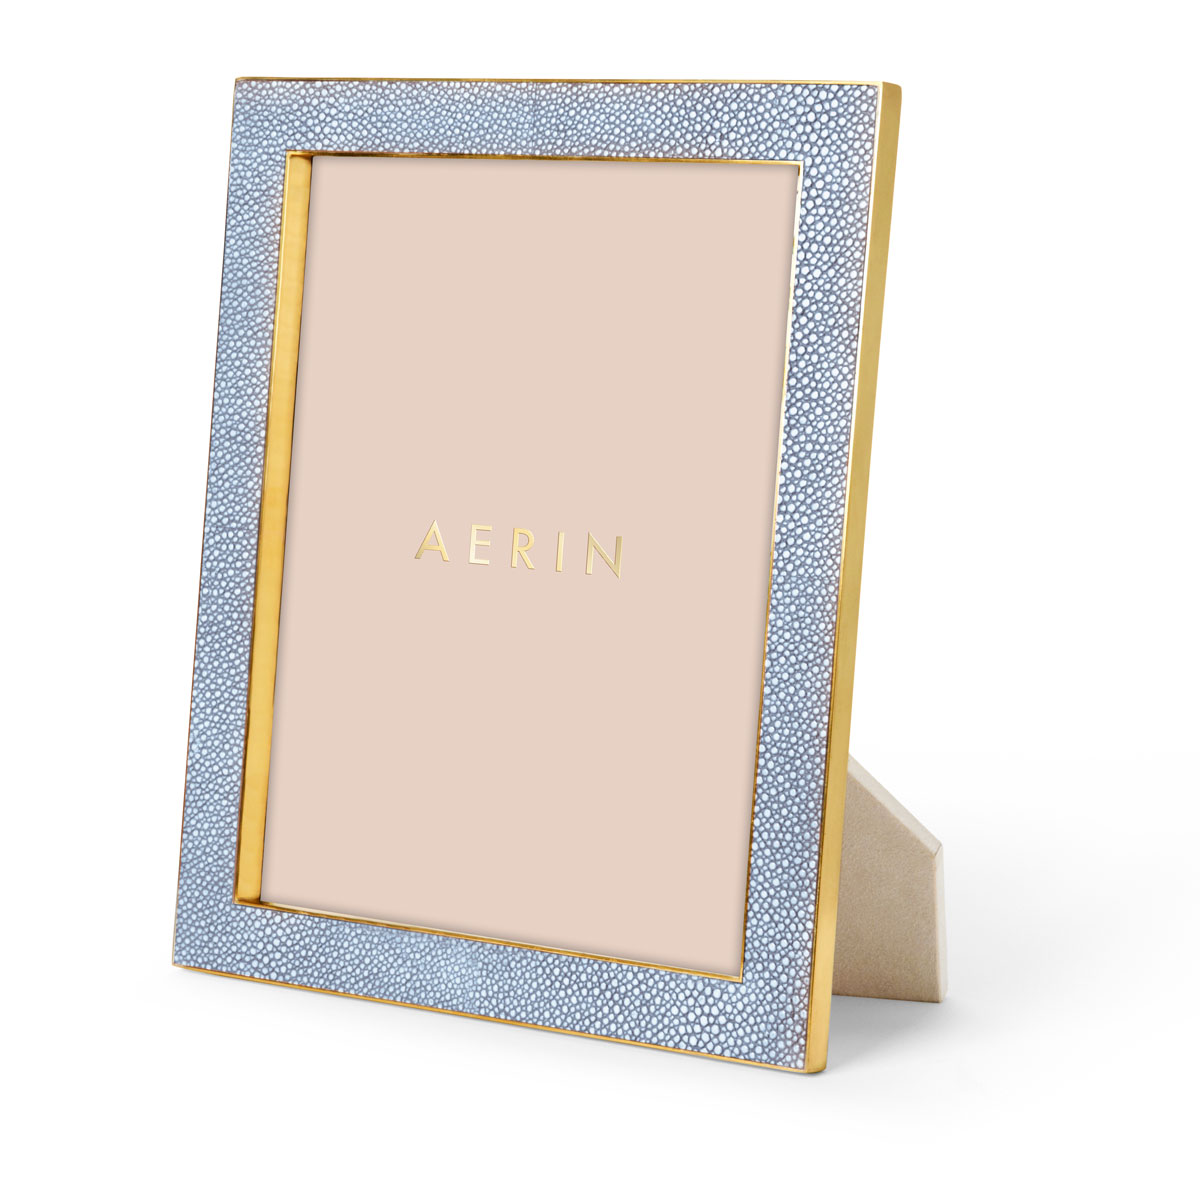 Aerin Classic Shagreen Frame, Blue 8x10"